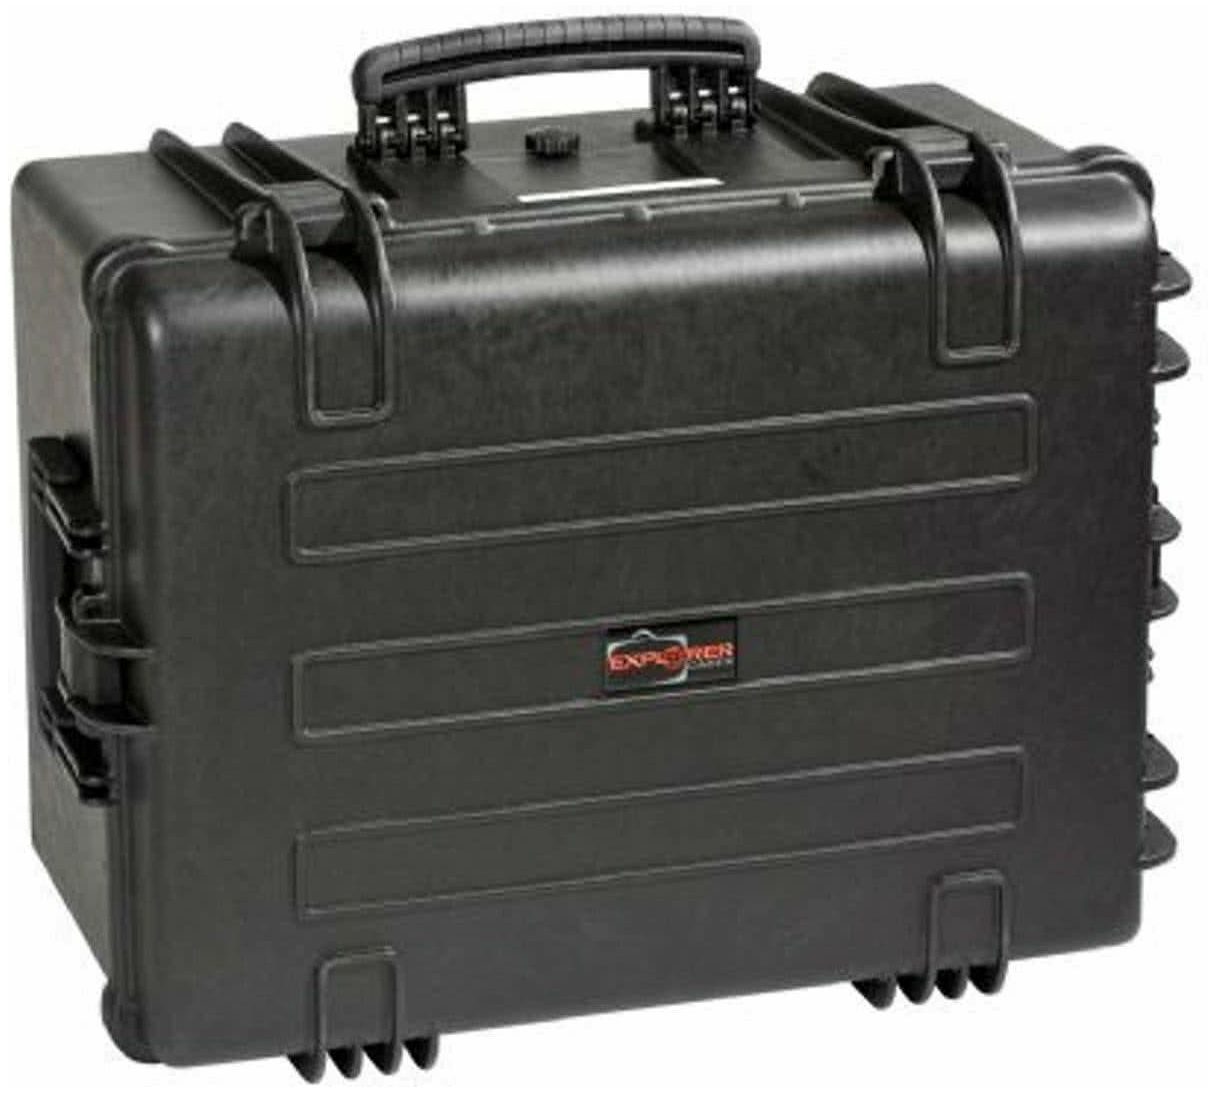 Explorer Cases 5833 Black 607x510x372mm kufer za foto opremu kofer Camera Case